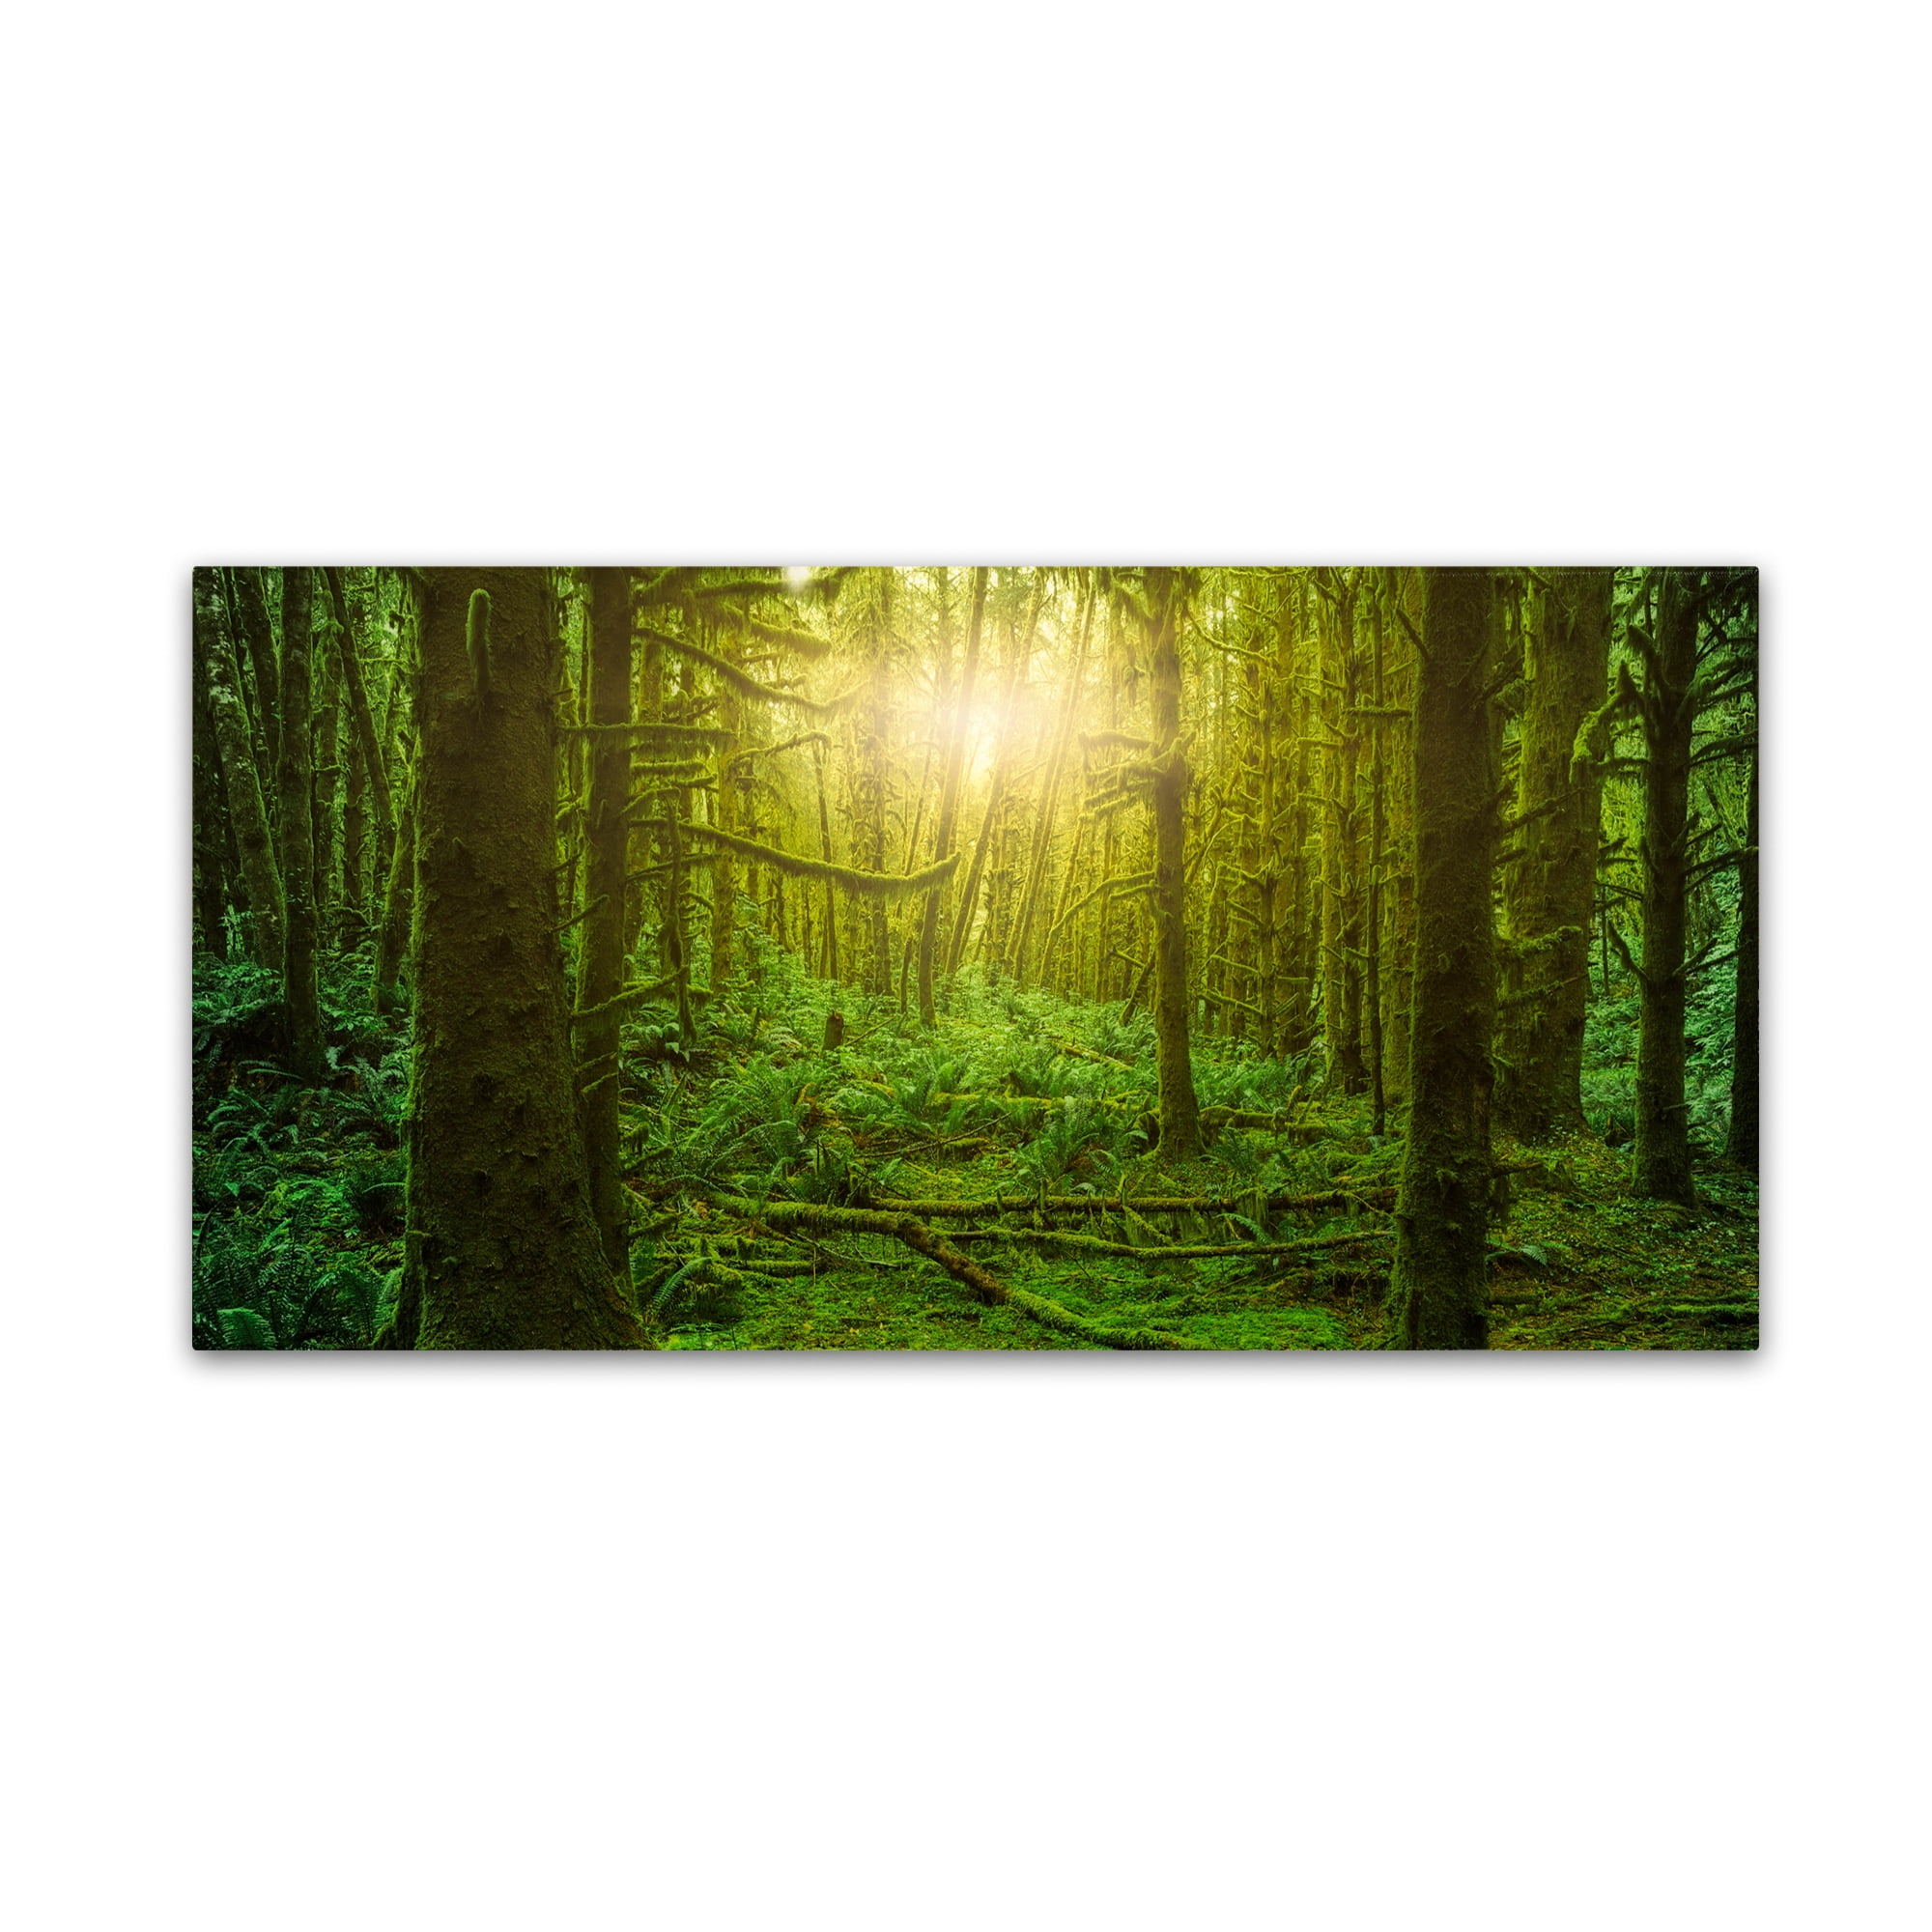 Trademark Fine Art 'Dream Forest 3' Canvas Art by Moises Levy - Walmart.com